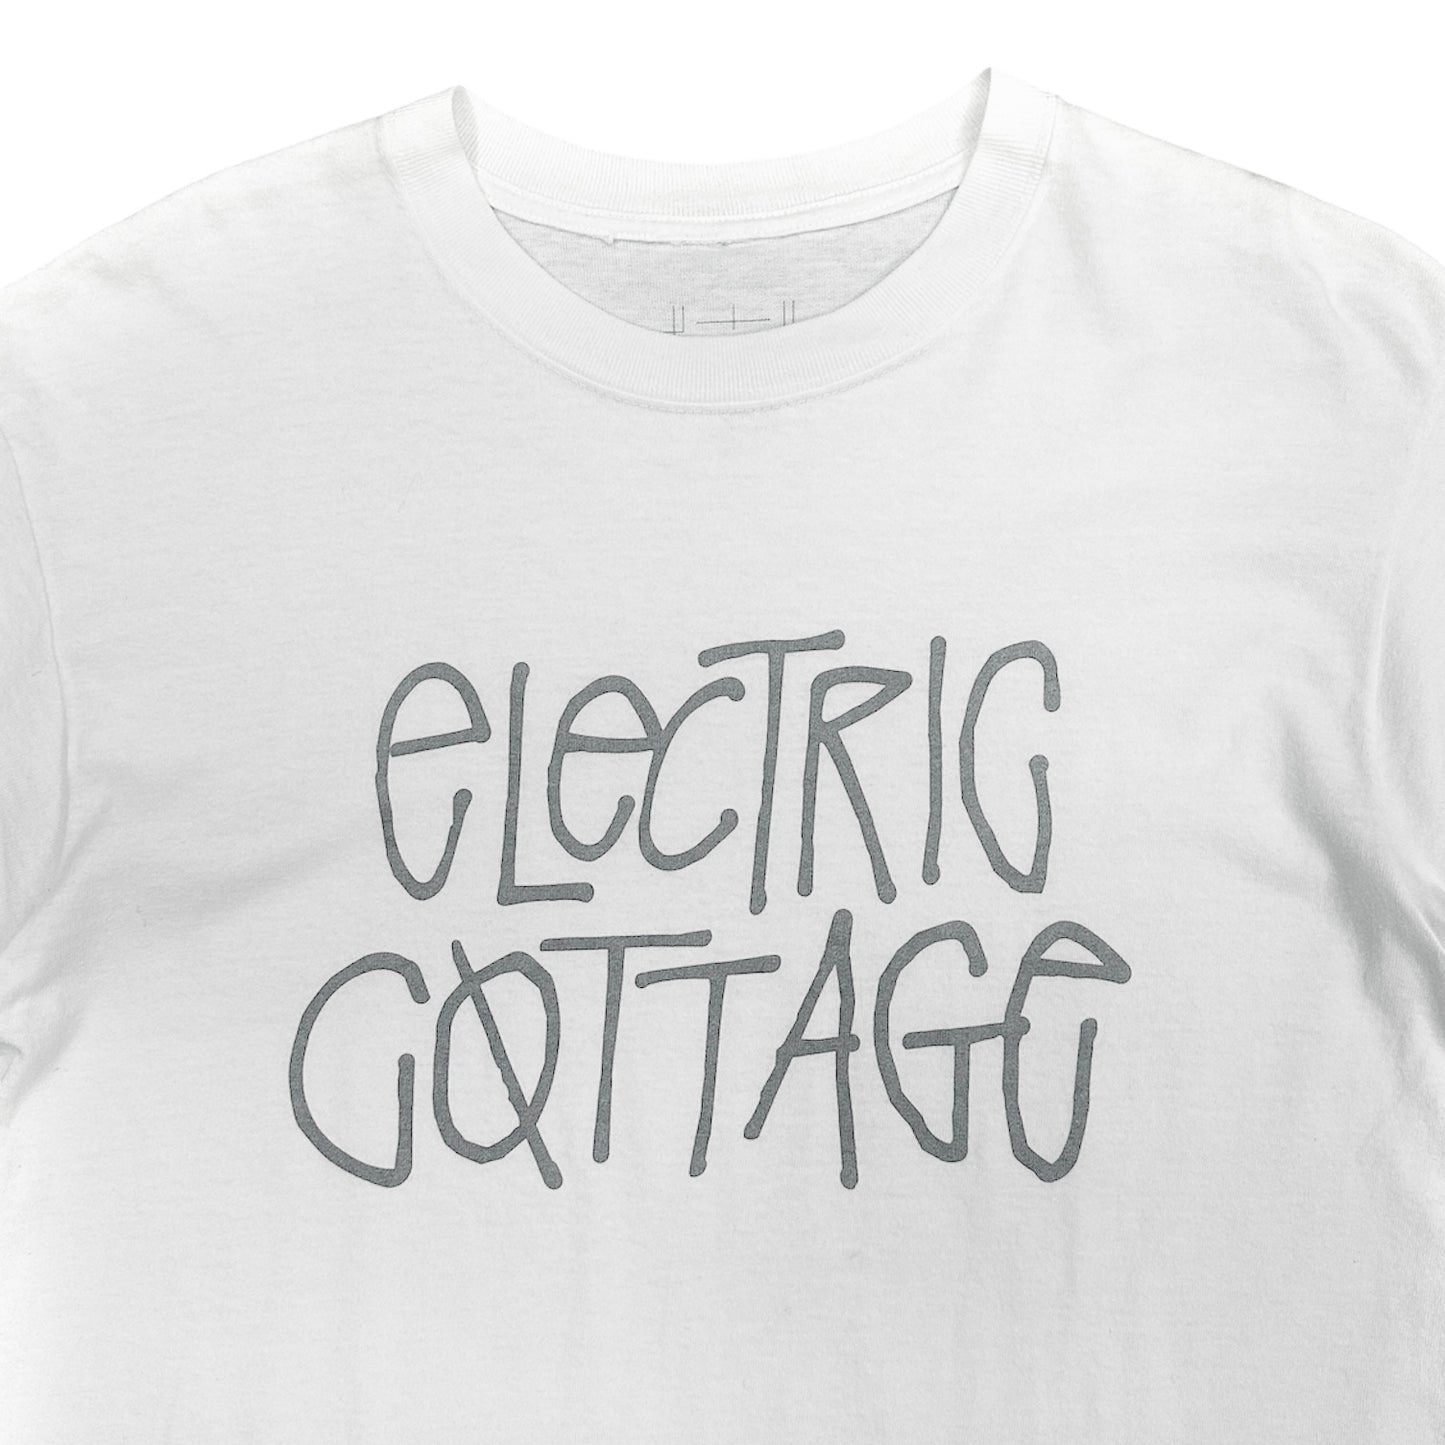 ELECTRIC COTTAGE / SHAWN FONT F&F T-SHIRT